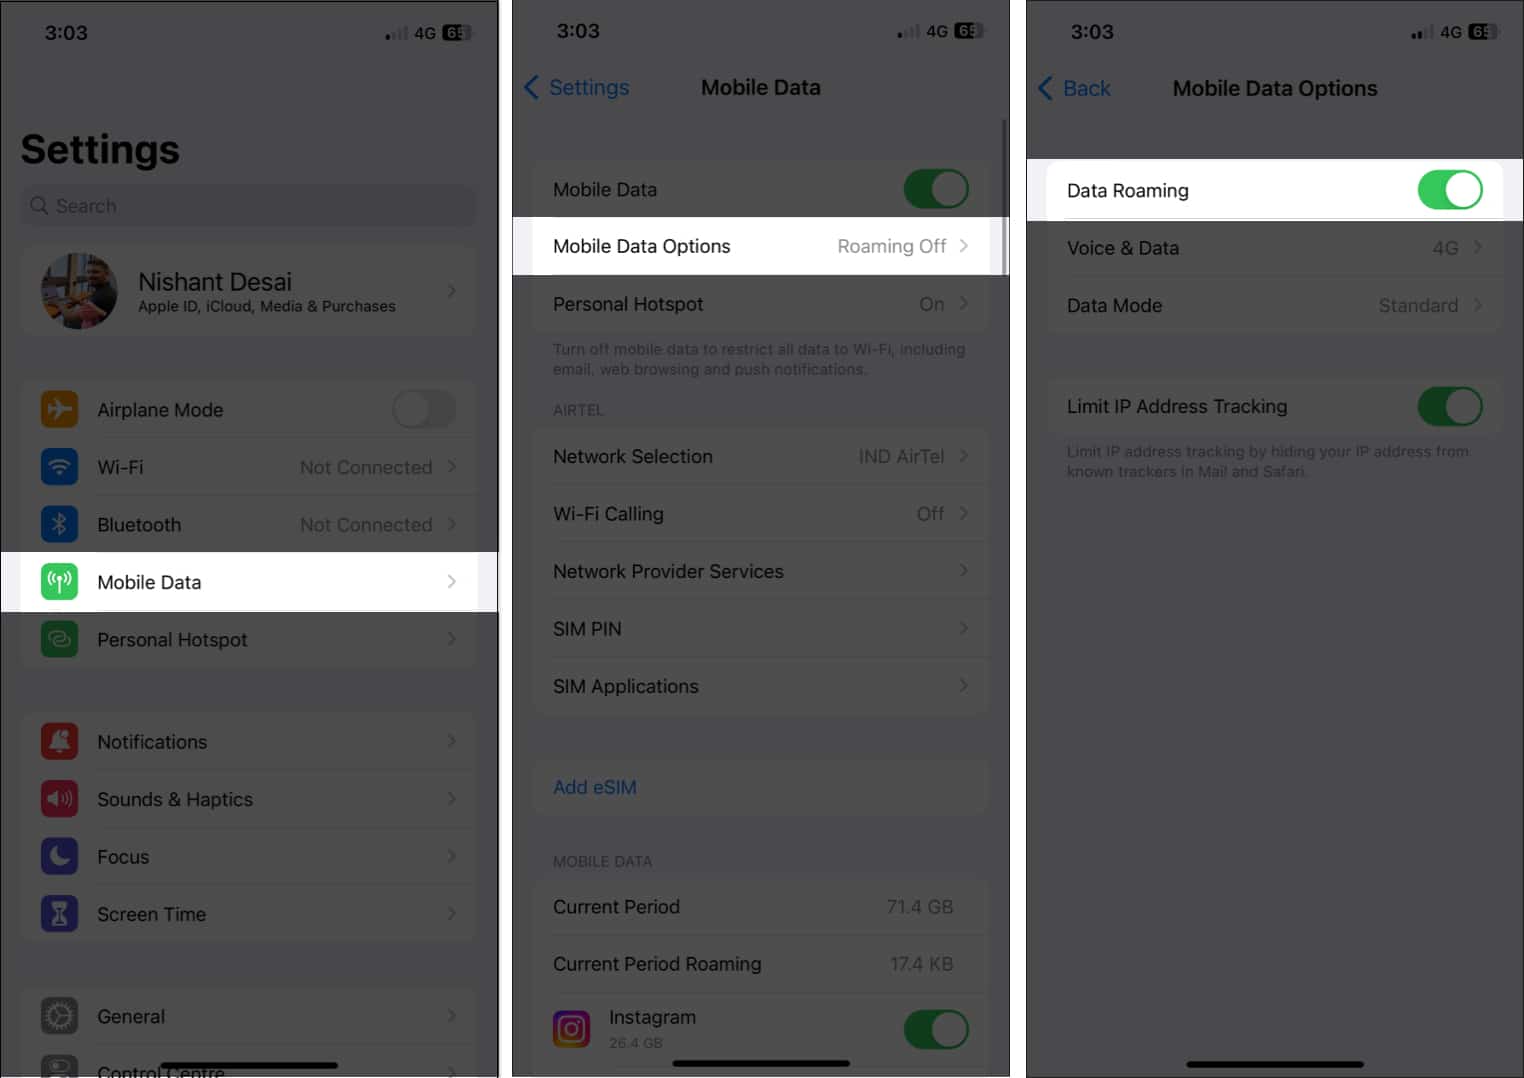 Access mobile data mobile data option toggle on data roaming in settings app